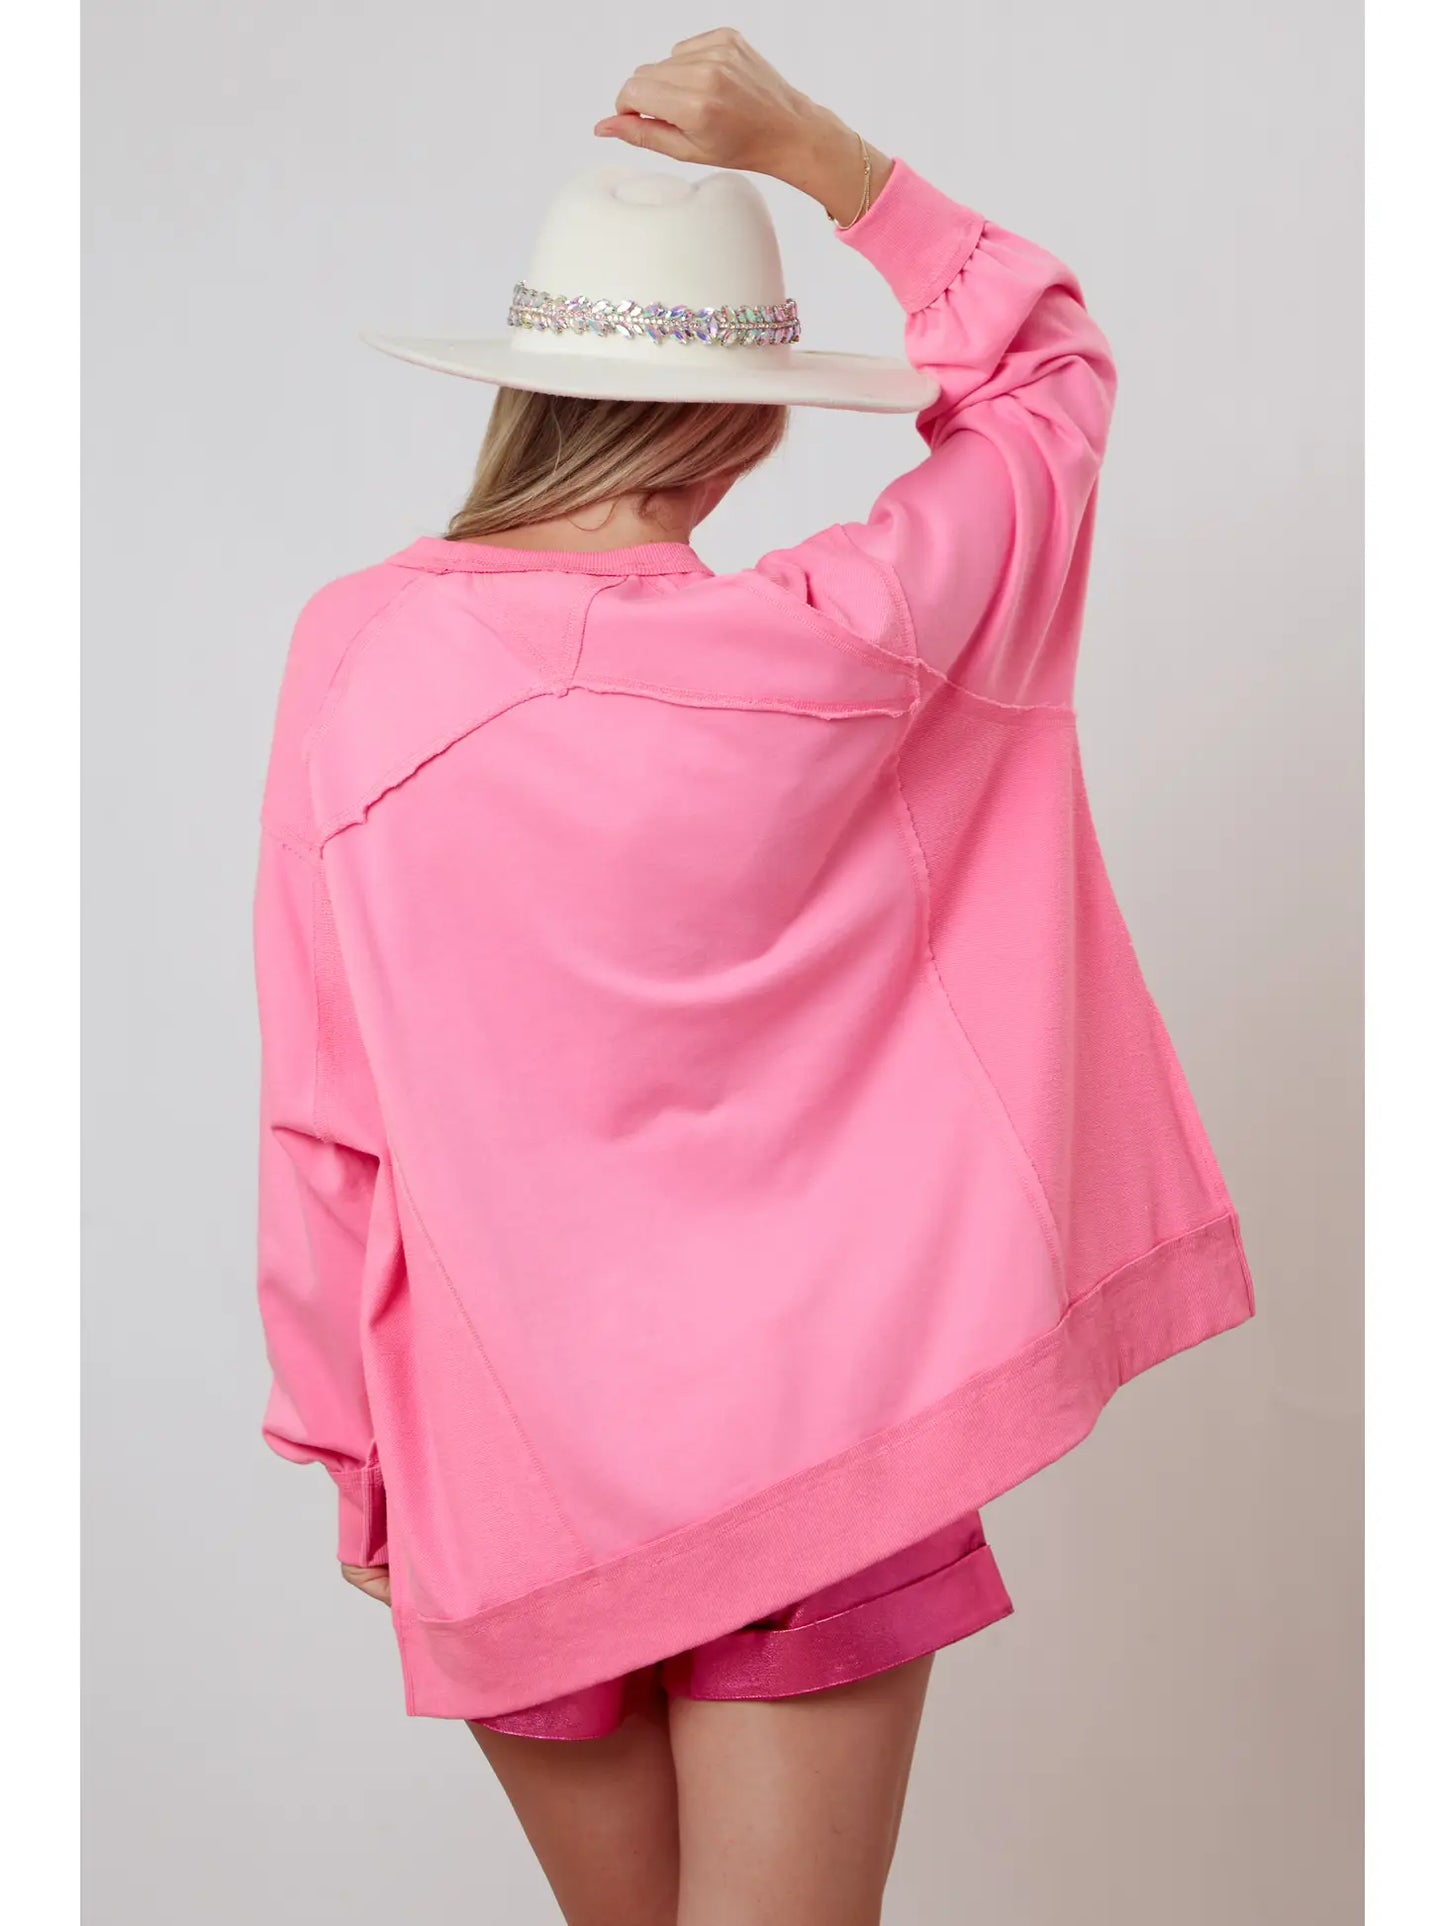 Stylish Persona Oversized Baby Pink Top